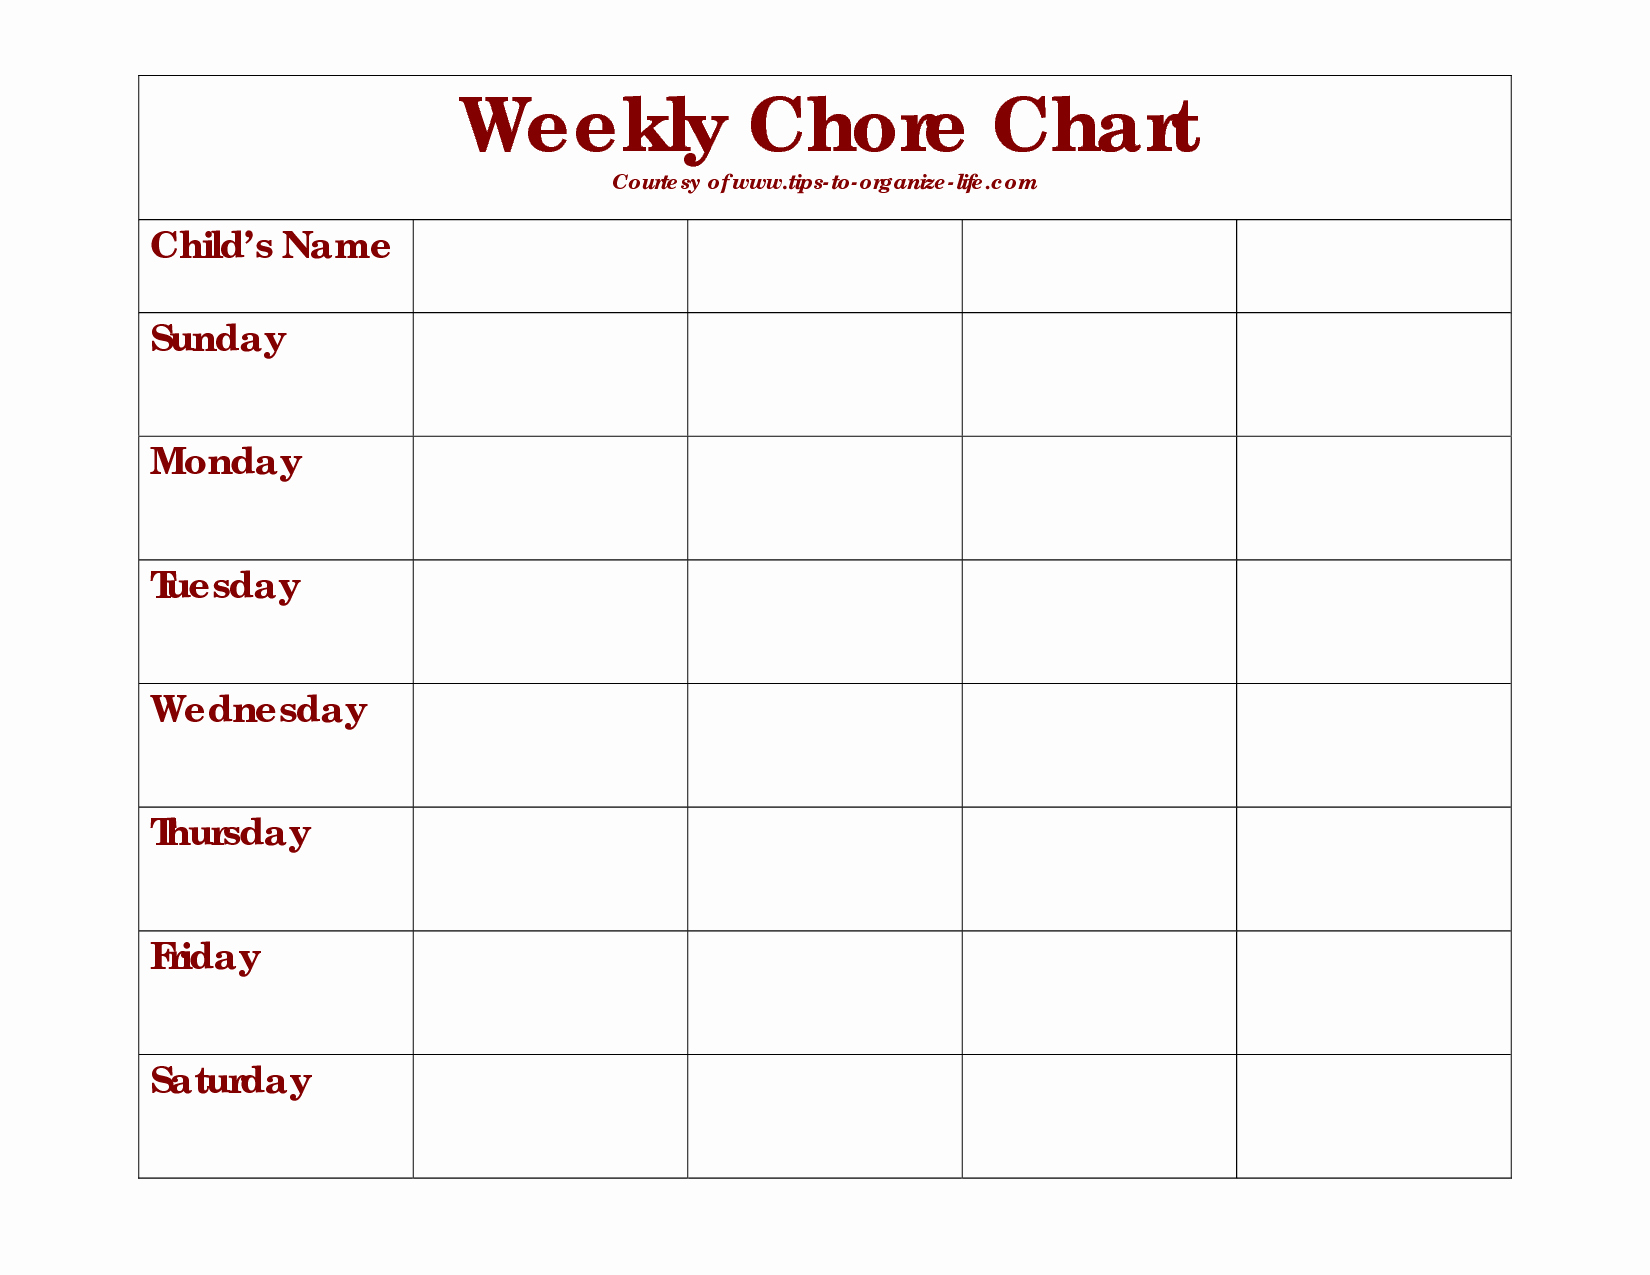 Weekly Chore Chart Templates Beautiful Weekly Chore Chart